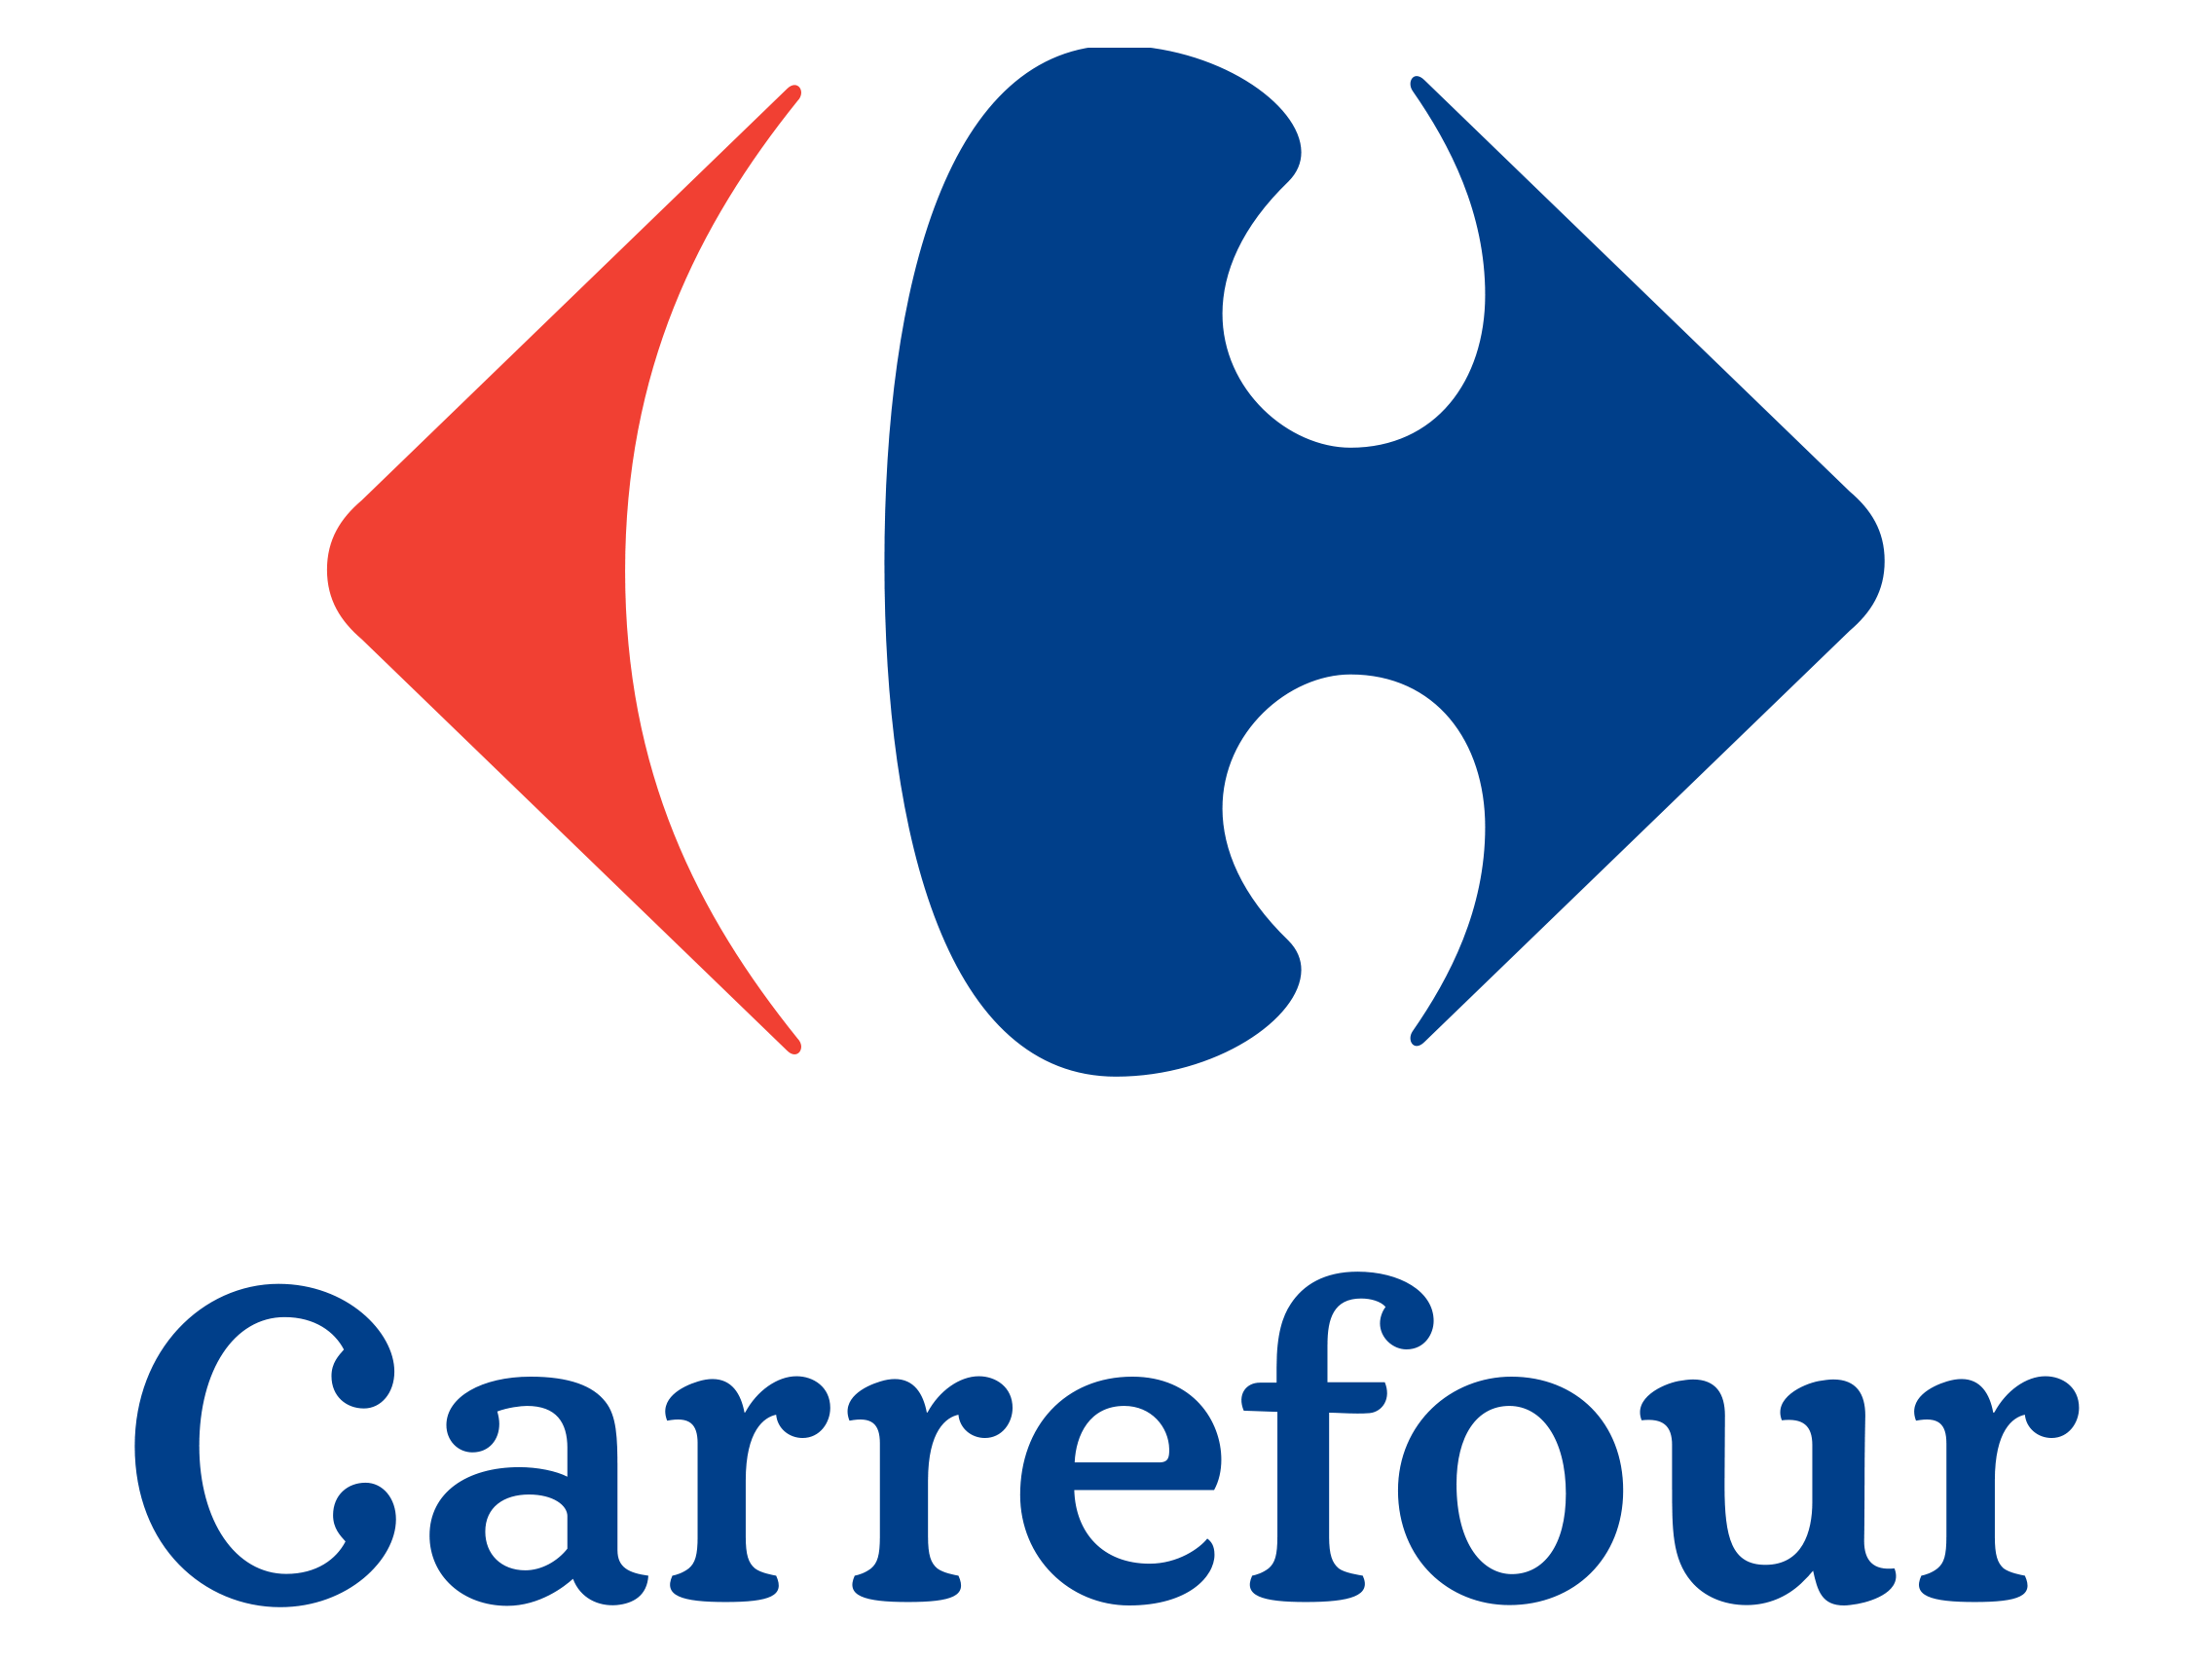 Carrefour Logo Transparent Png - Pluspng, Carrefour Logo PNG - Free PNG